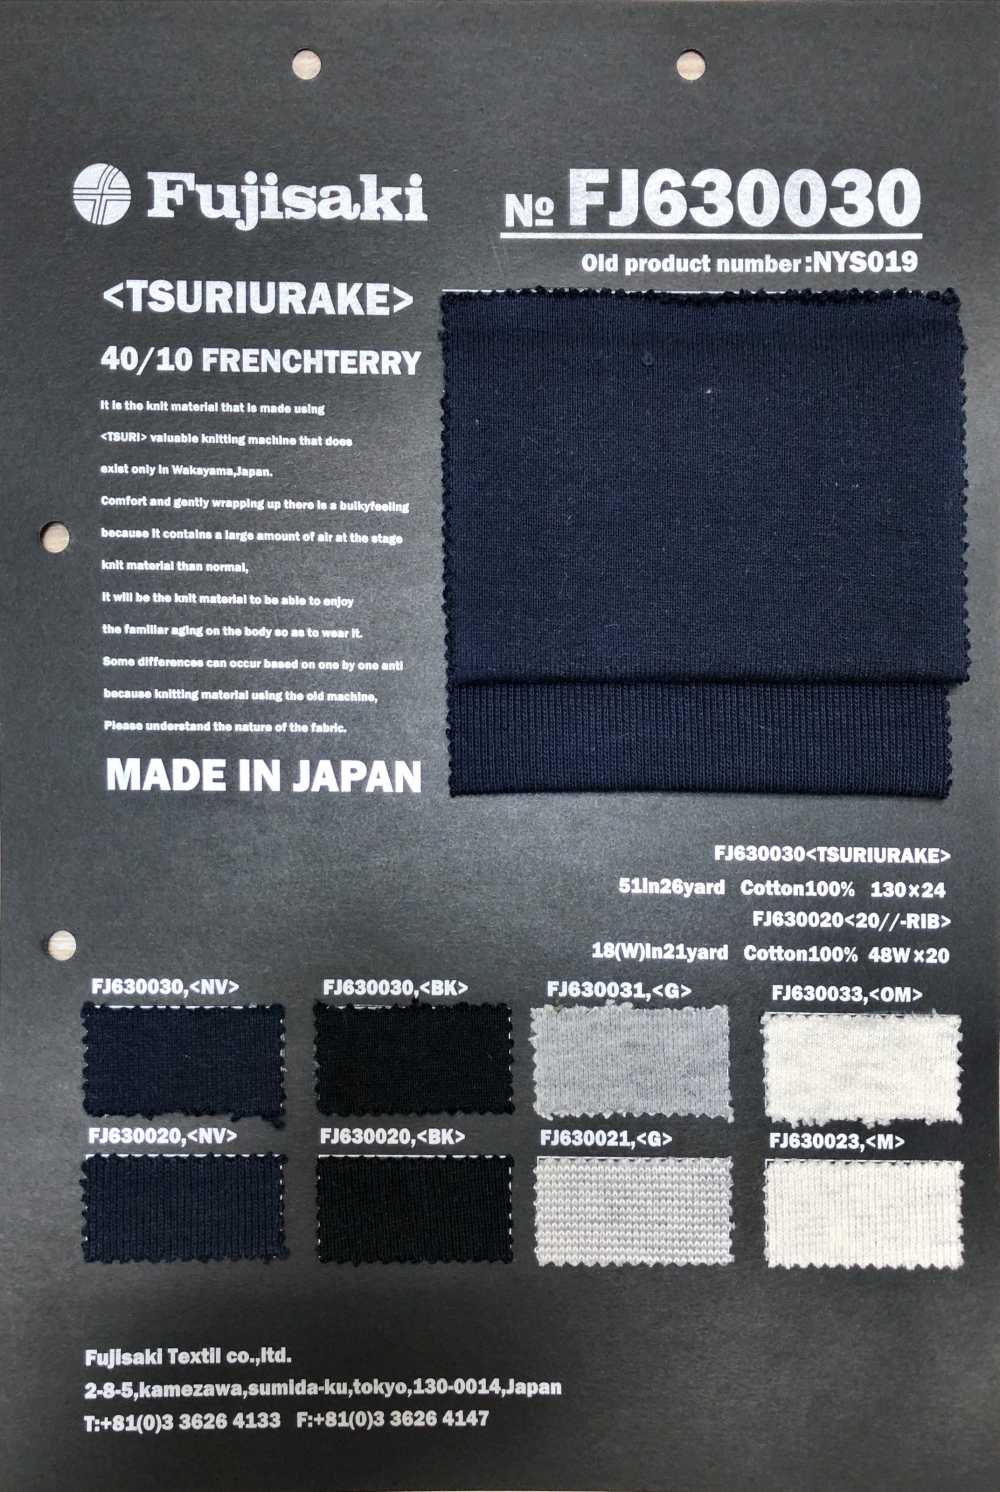 FJ630020 20//-針織羅紋[面料] Fujisaki Textile